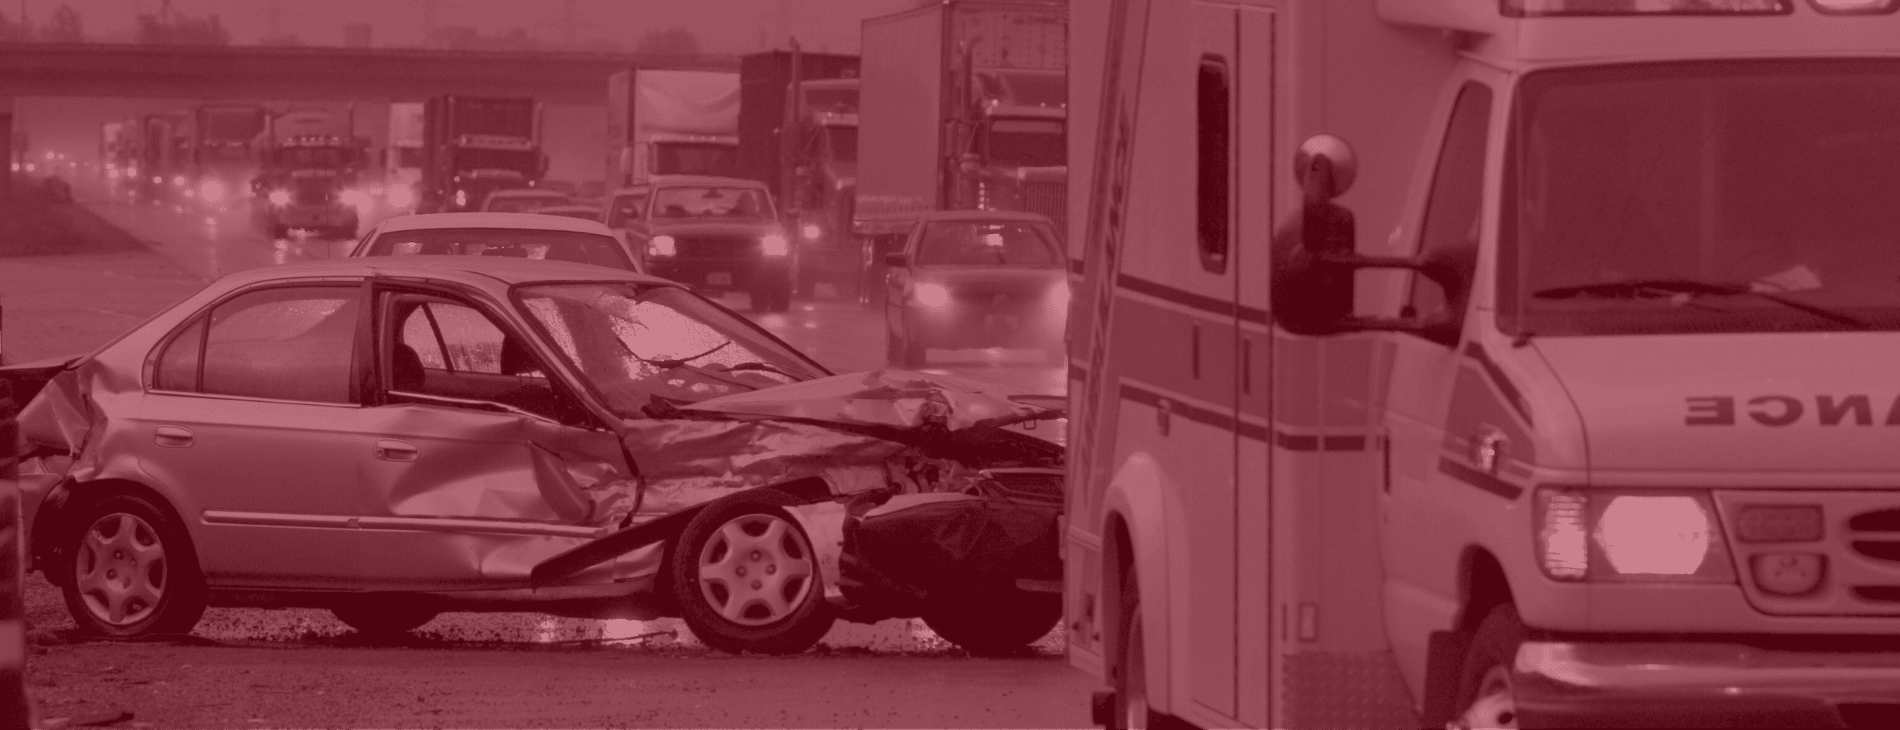 Petaluma two-car crash